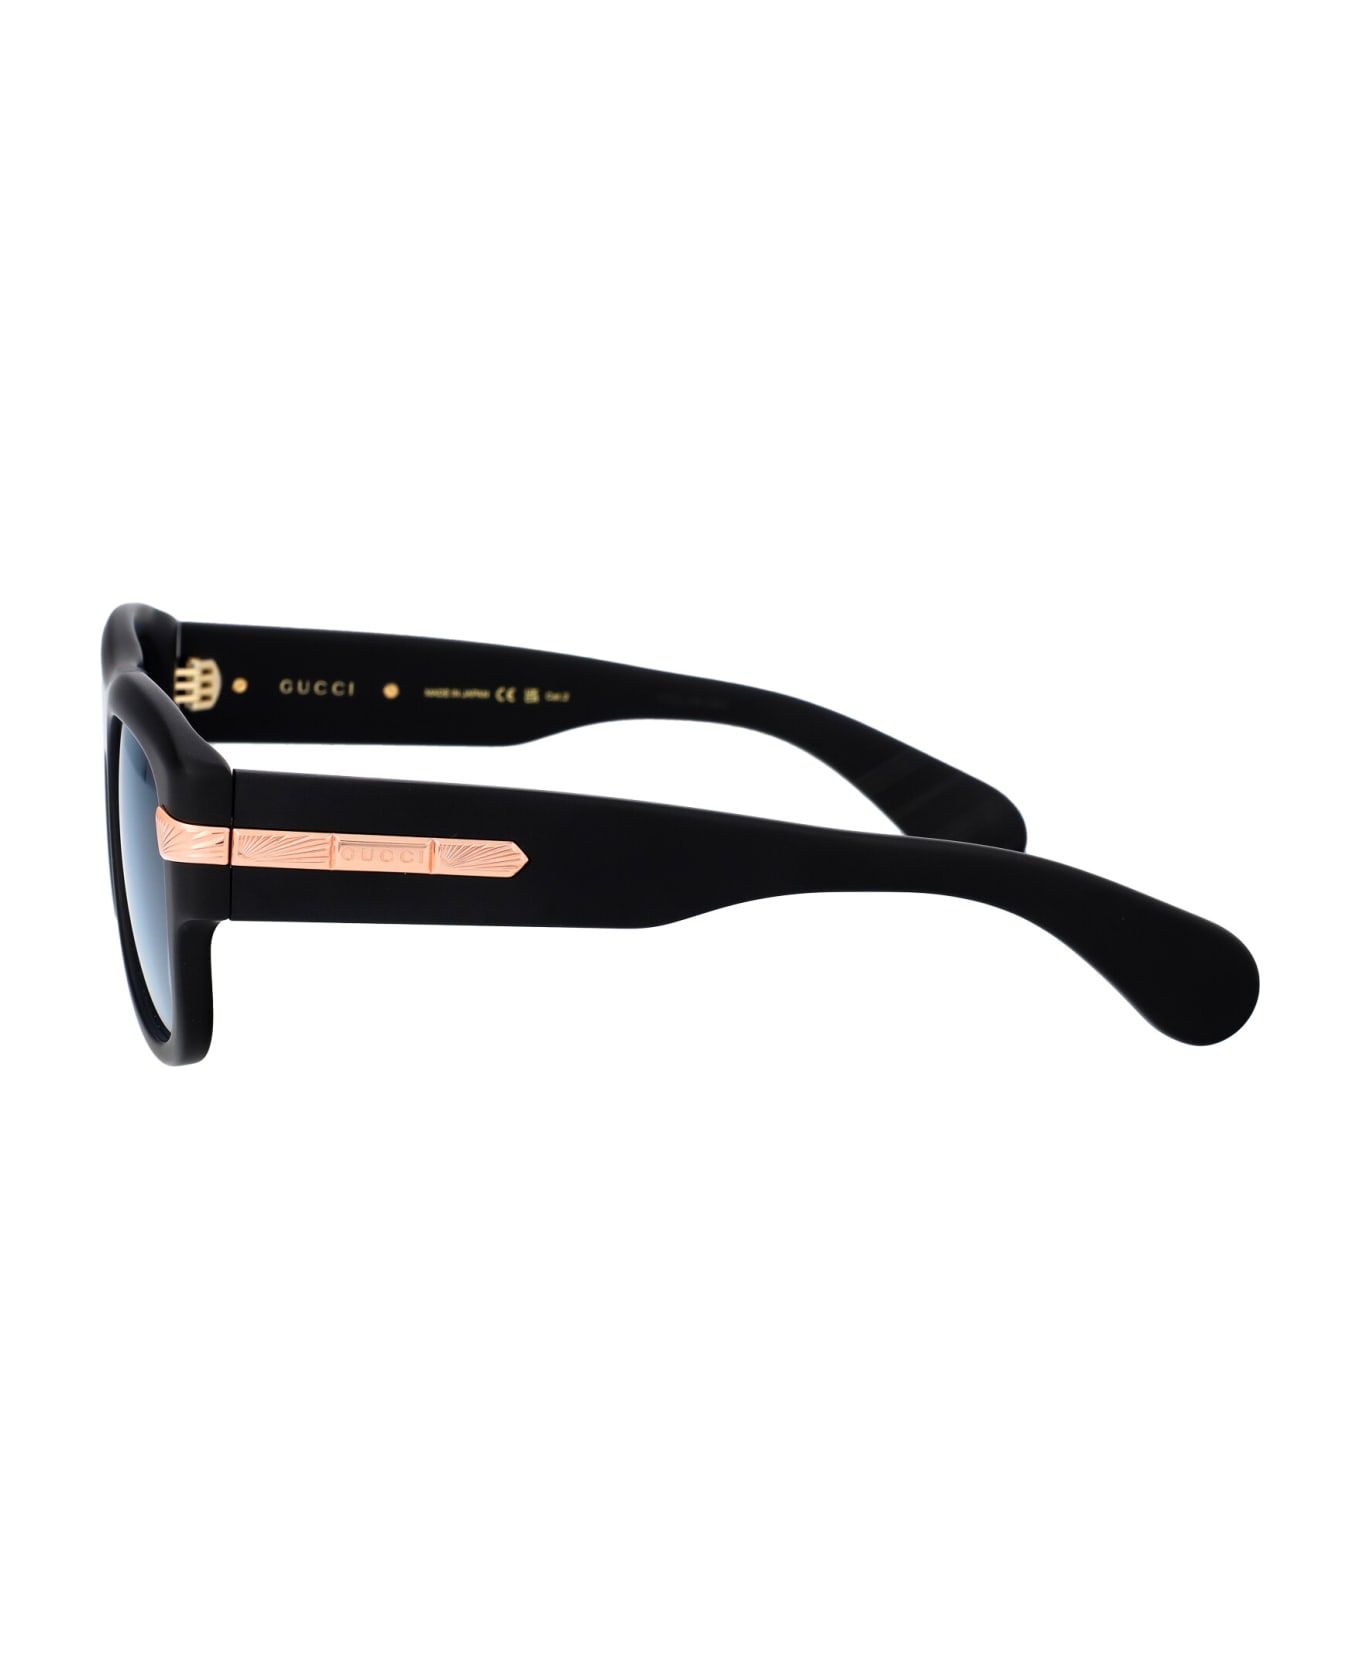 Gucci Eyewear Gg1517s Sunglasses - 002 BLACK BLACK BLUE サングラス